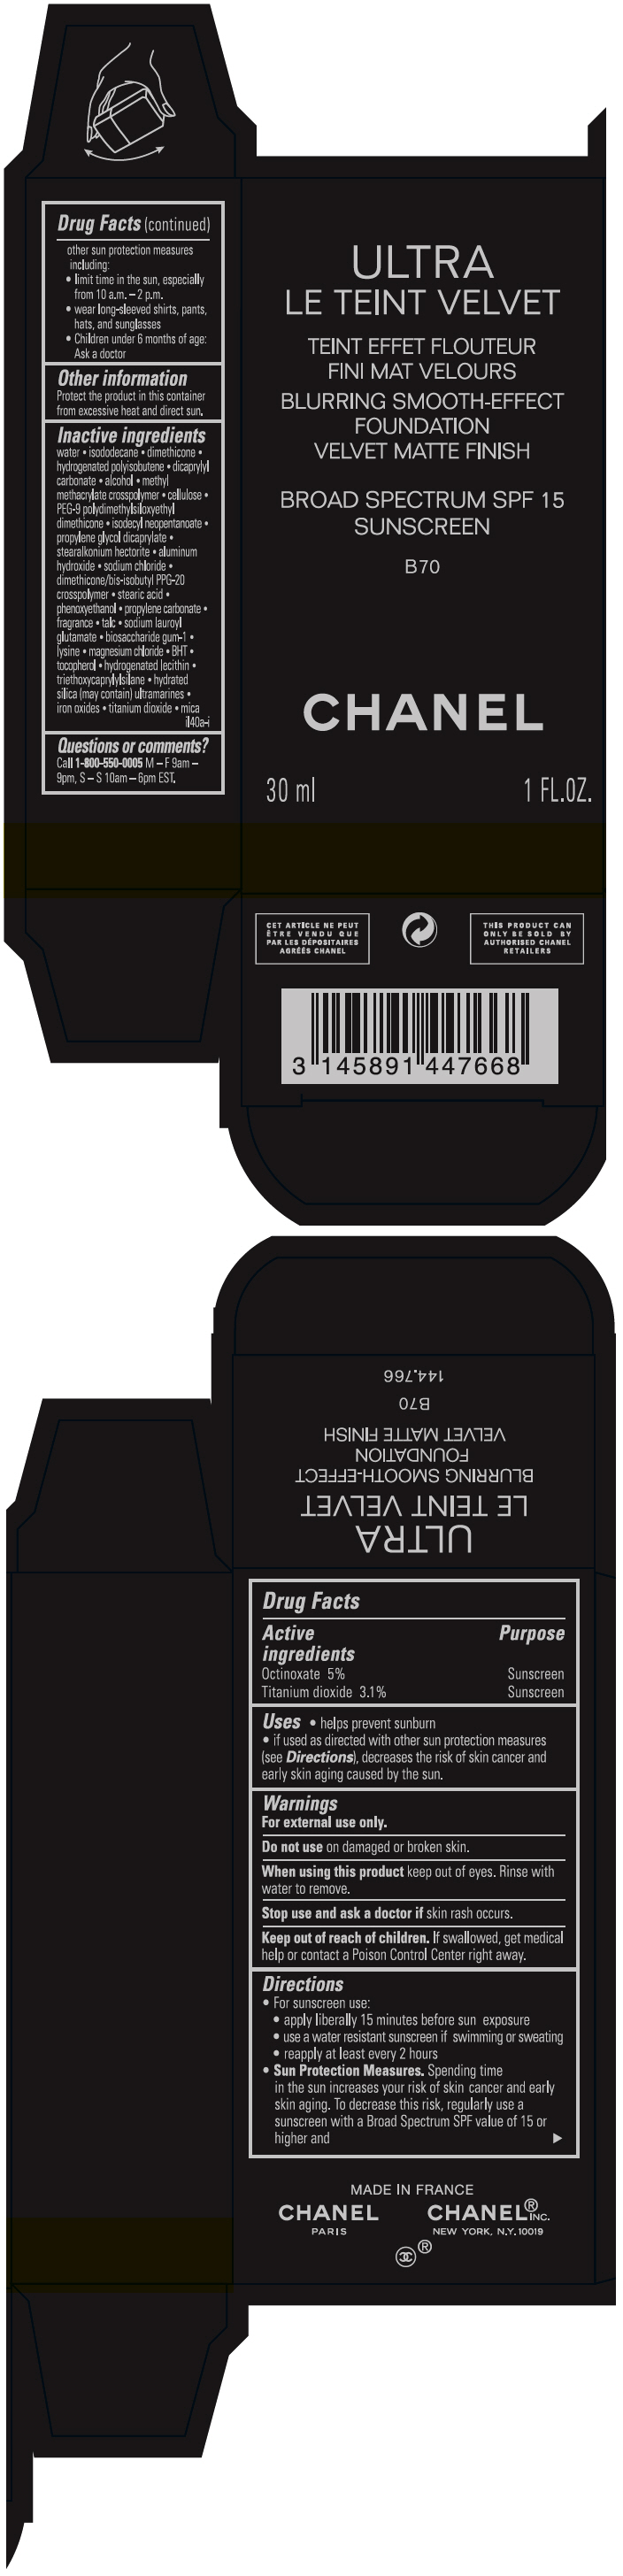 PRINCIPAL DISPLAY PANEL - 30 ml Bottle Carton - B70